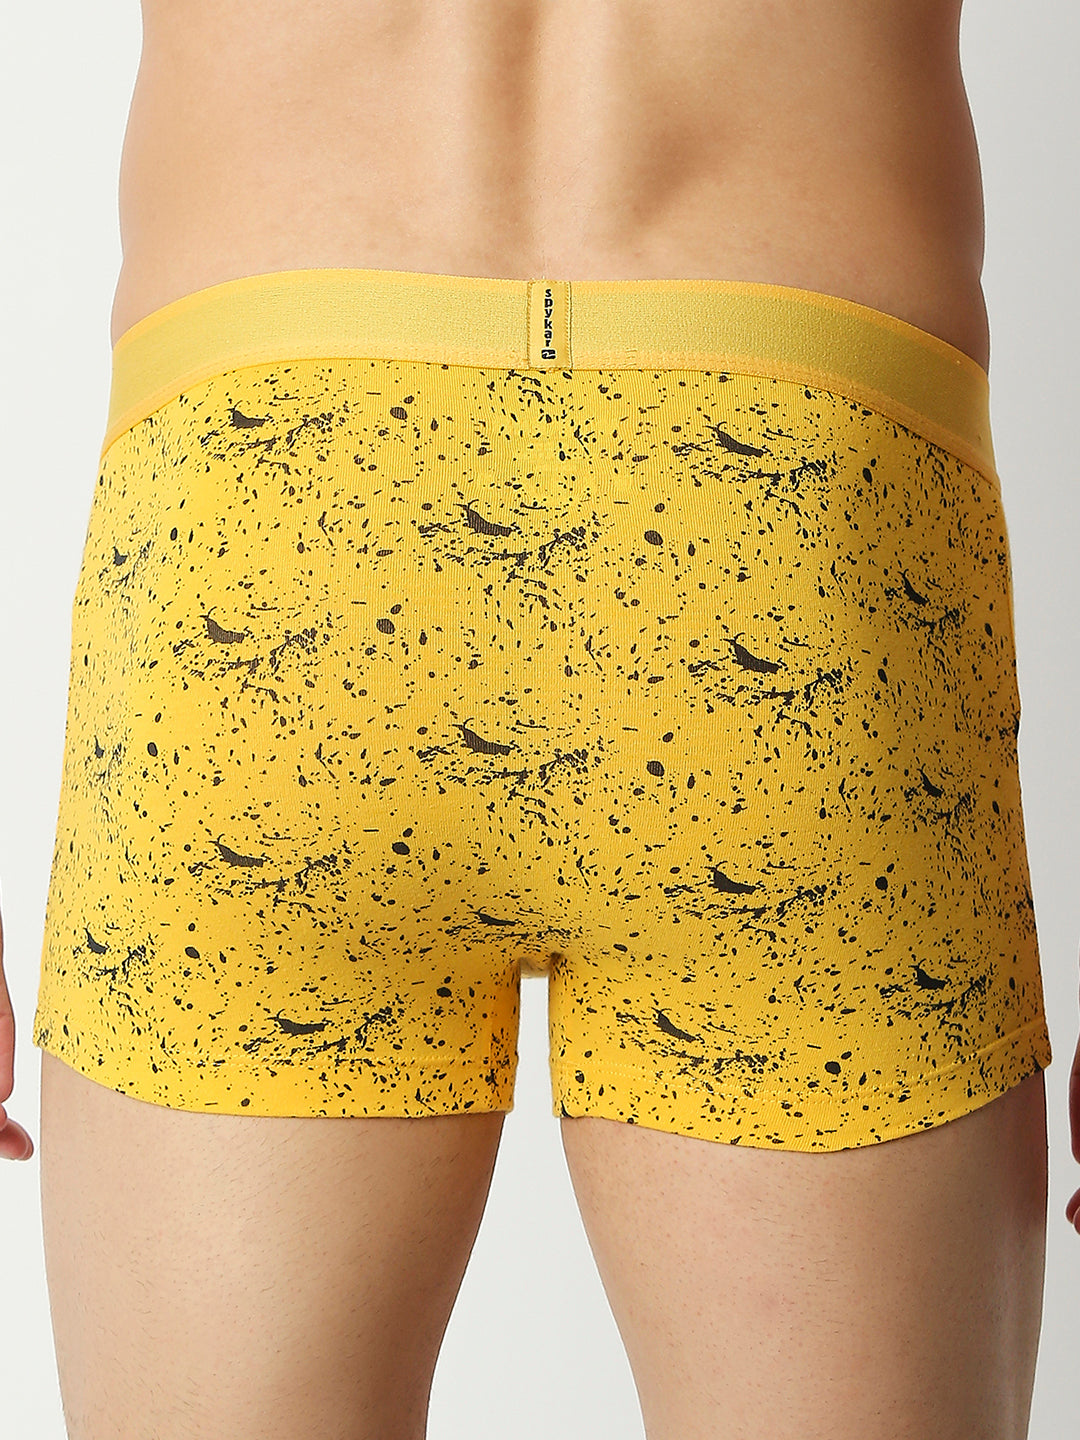 Men Premium Yellow Cotton Blend Regular Fit Trunk - UnderJeans by Spykar